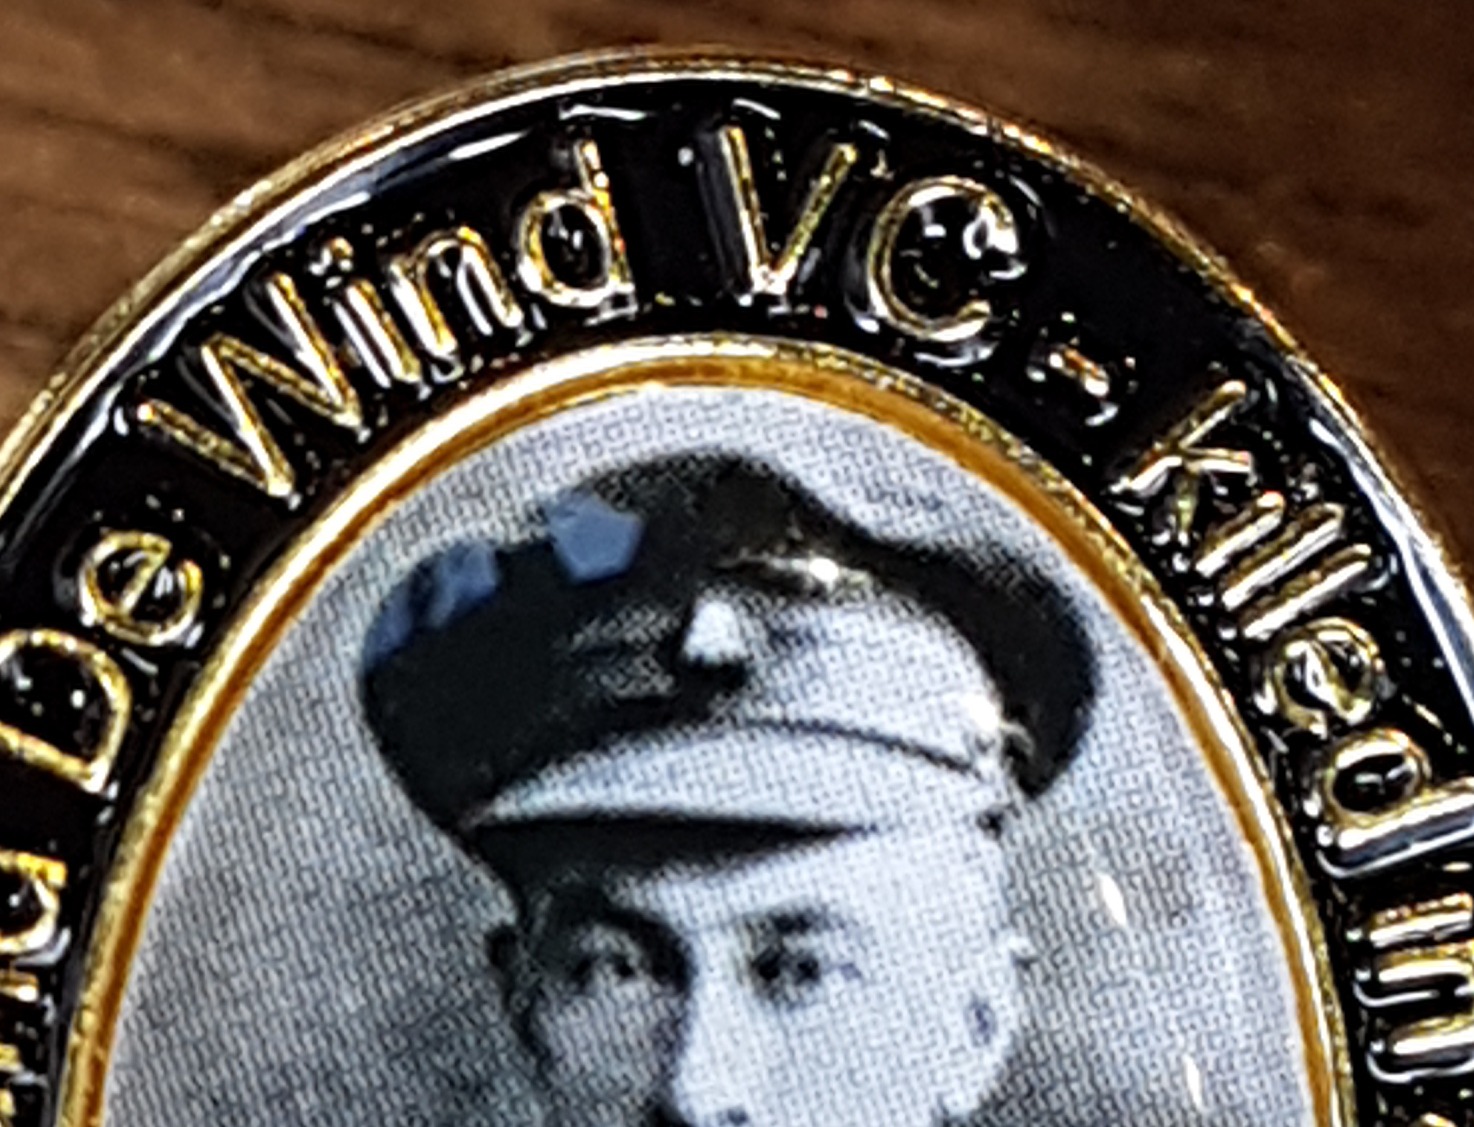 De Wind family descendants commemorate the life of former OC Edmund De Wind VC